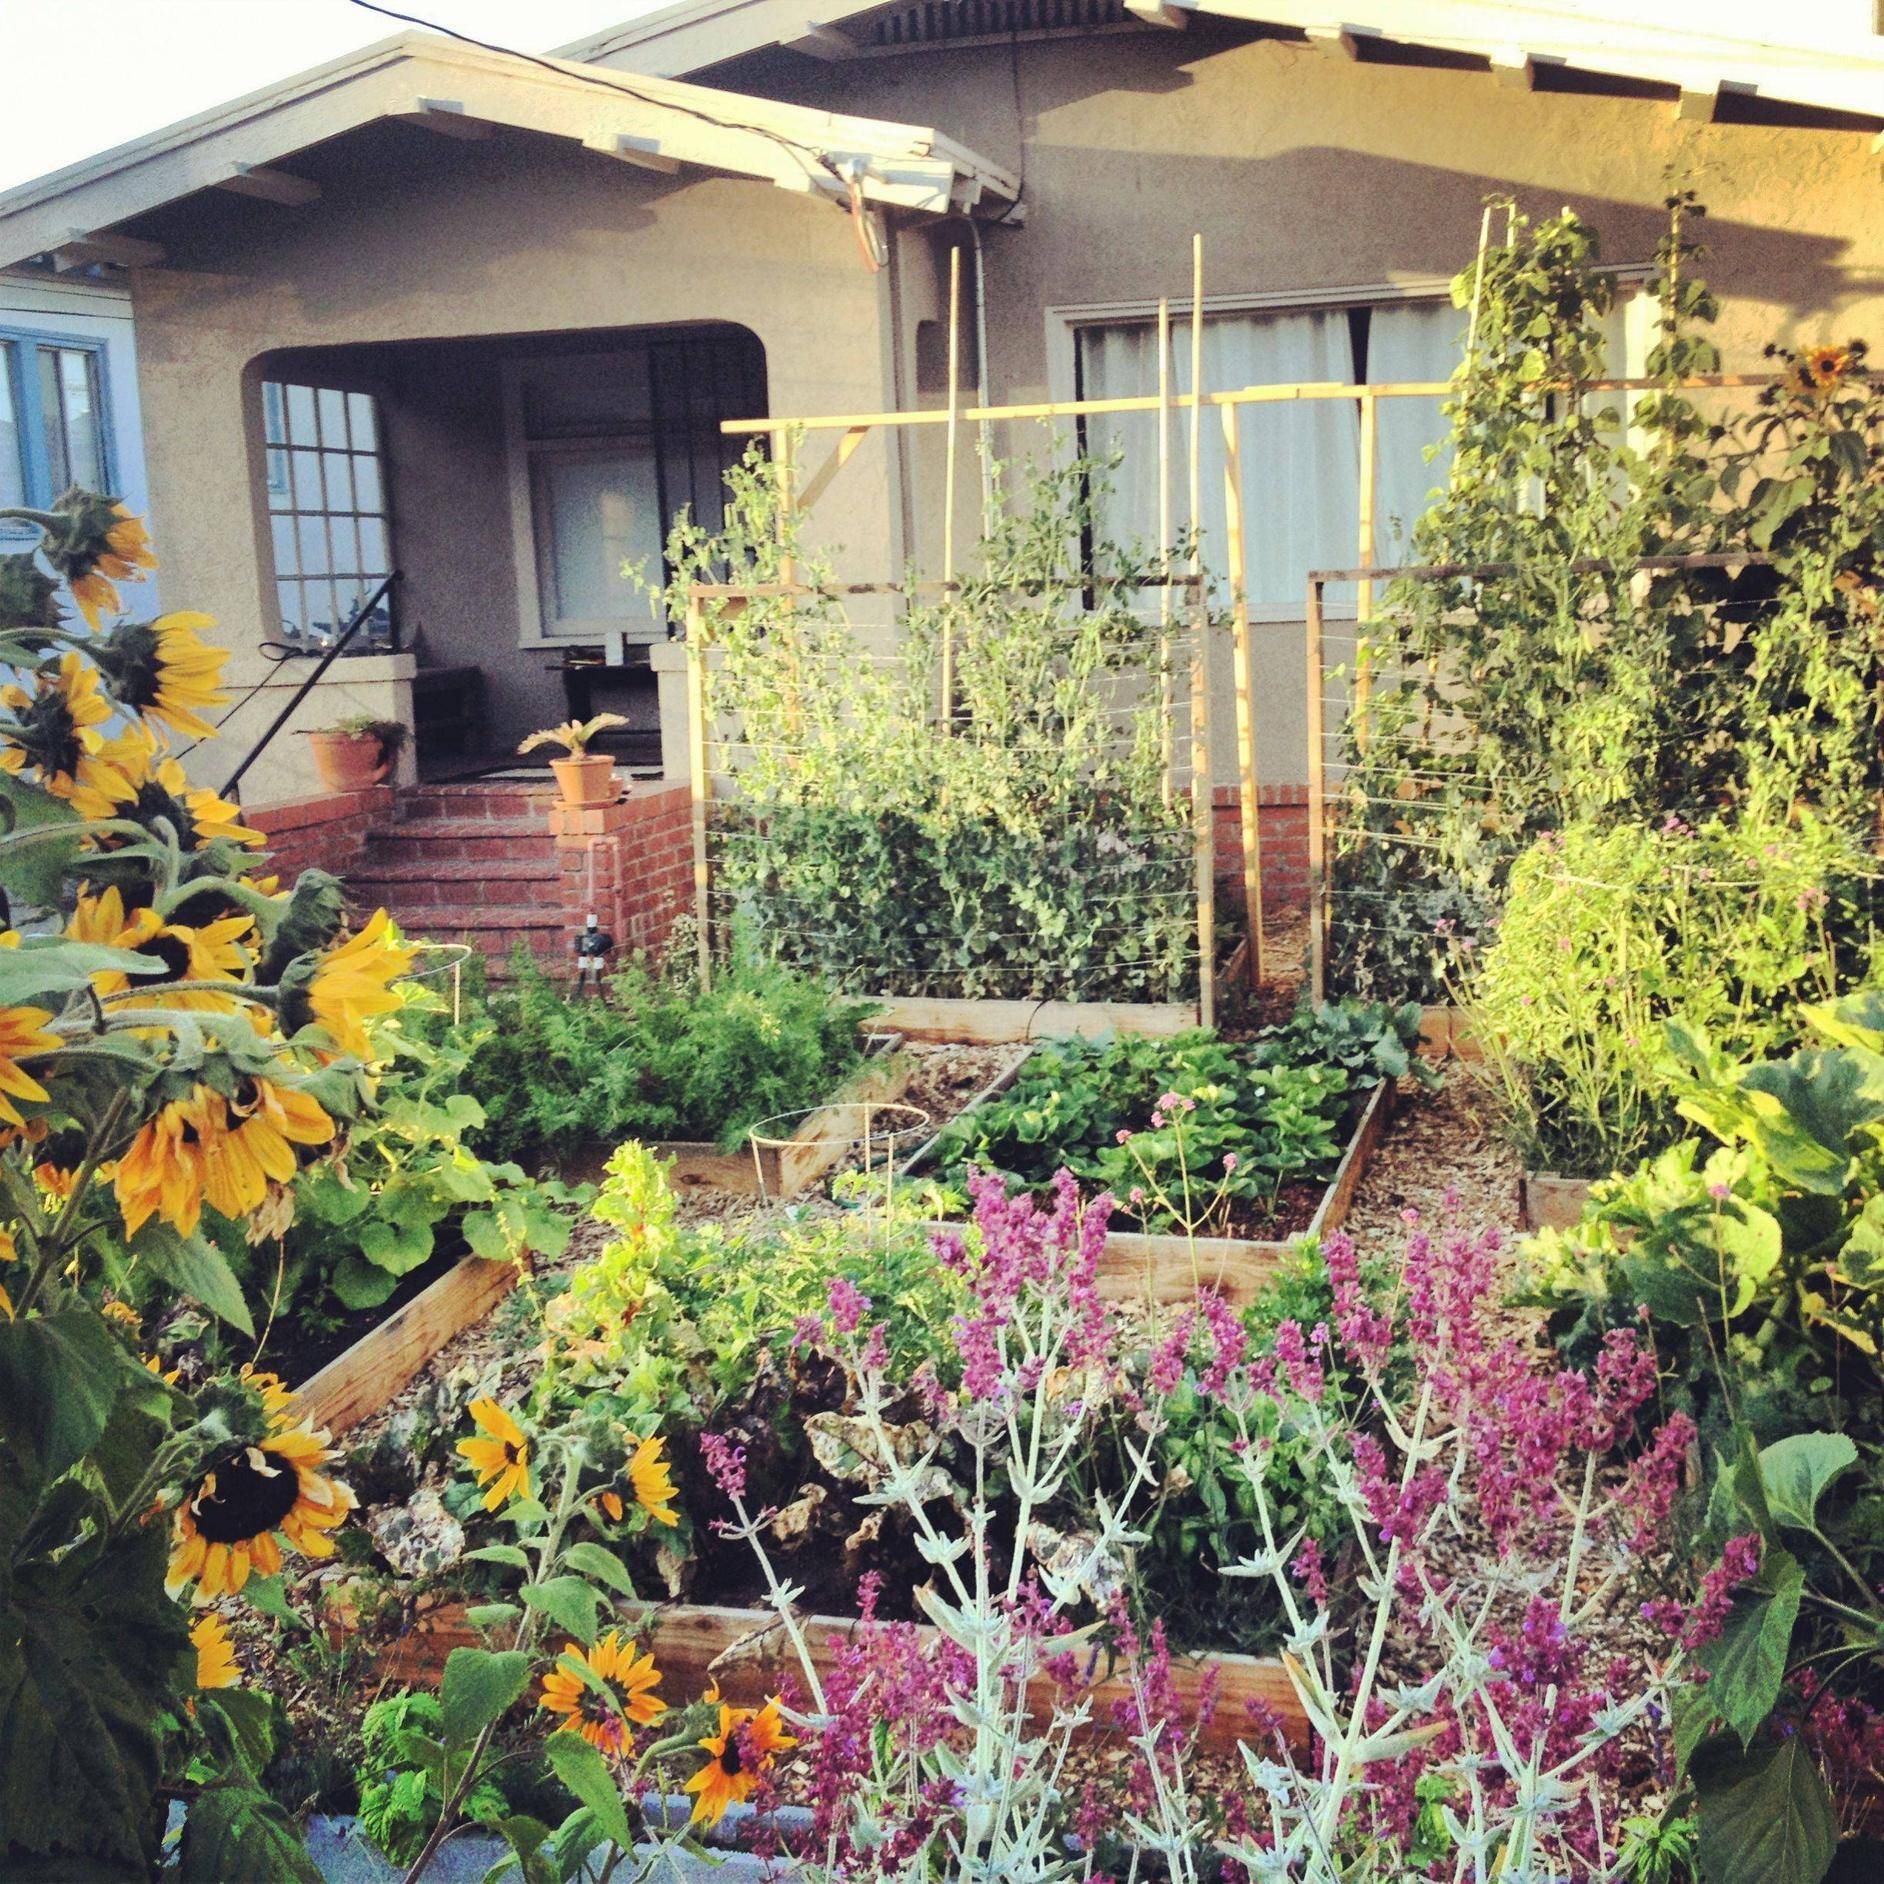 An Edible Front Yard Garden